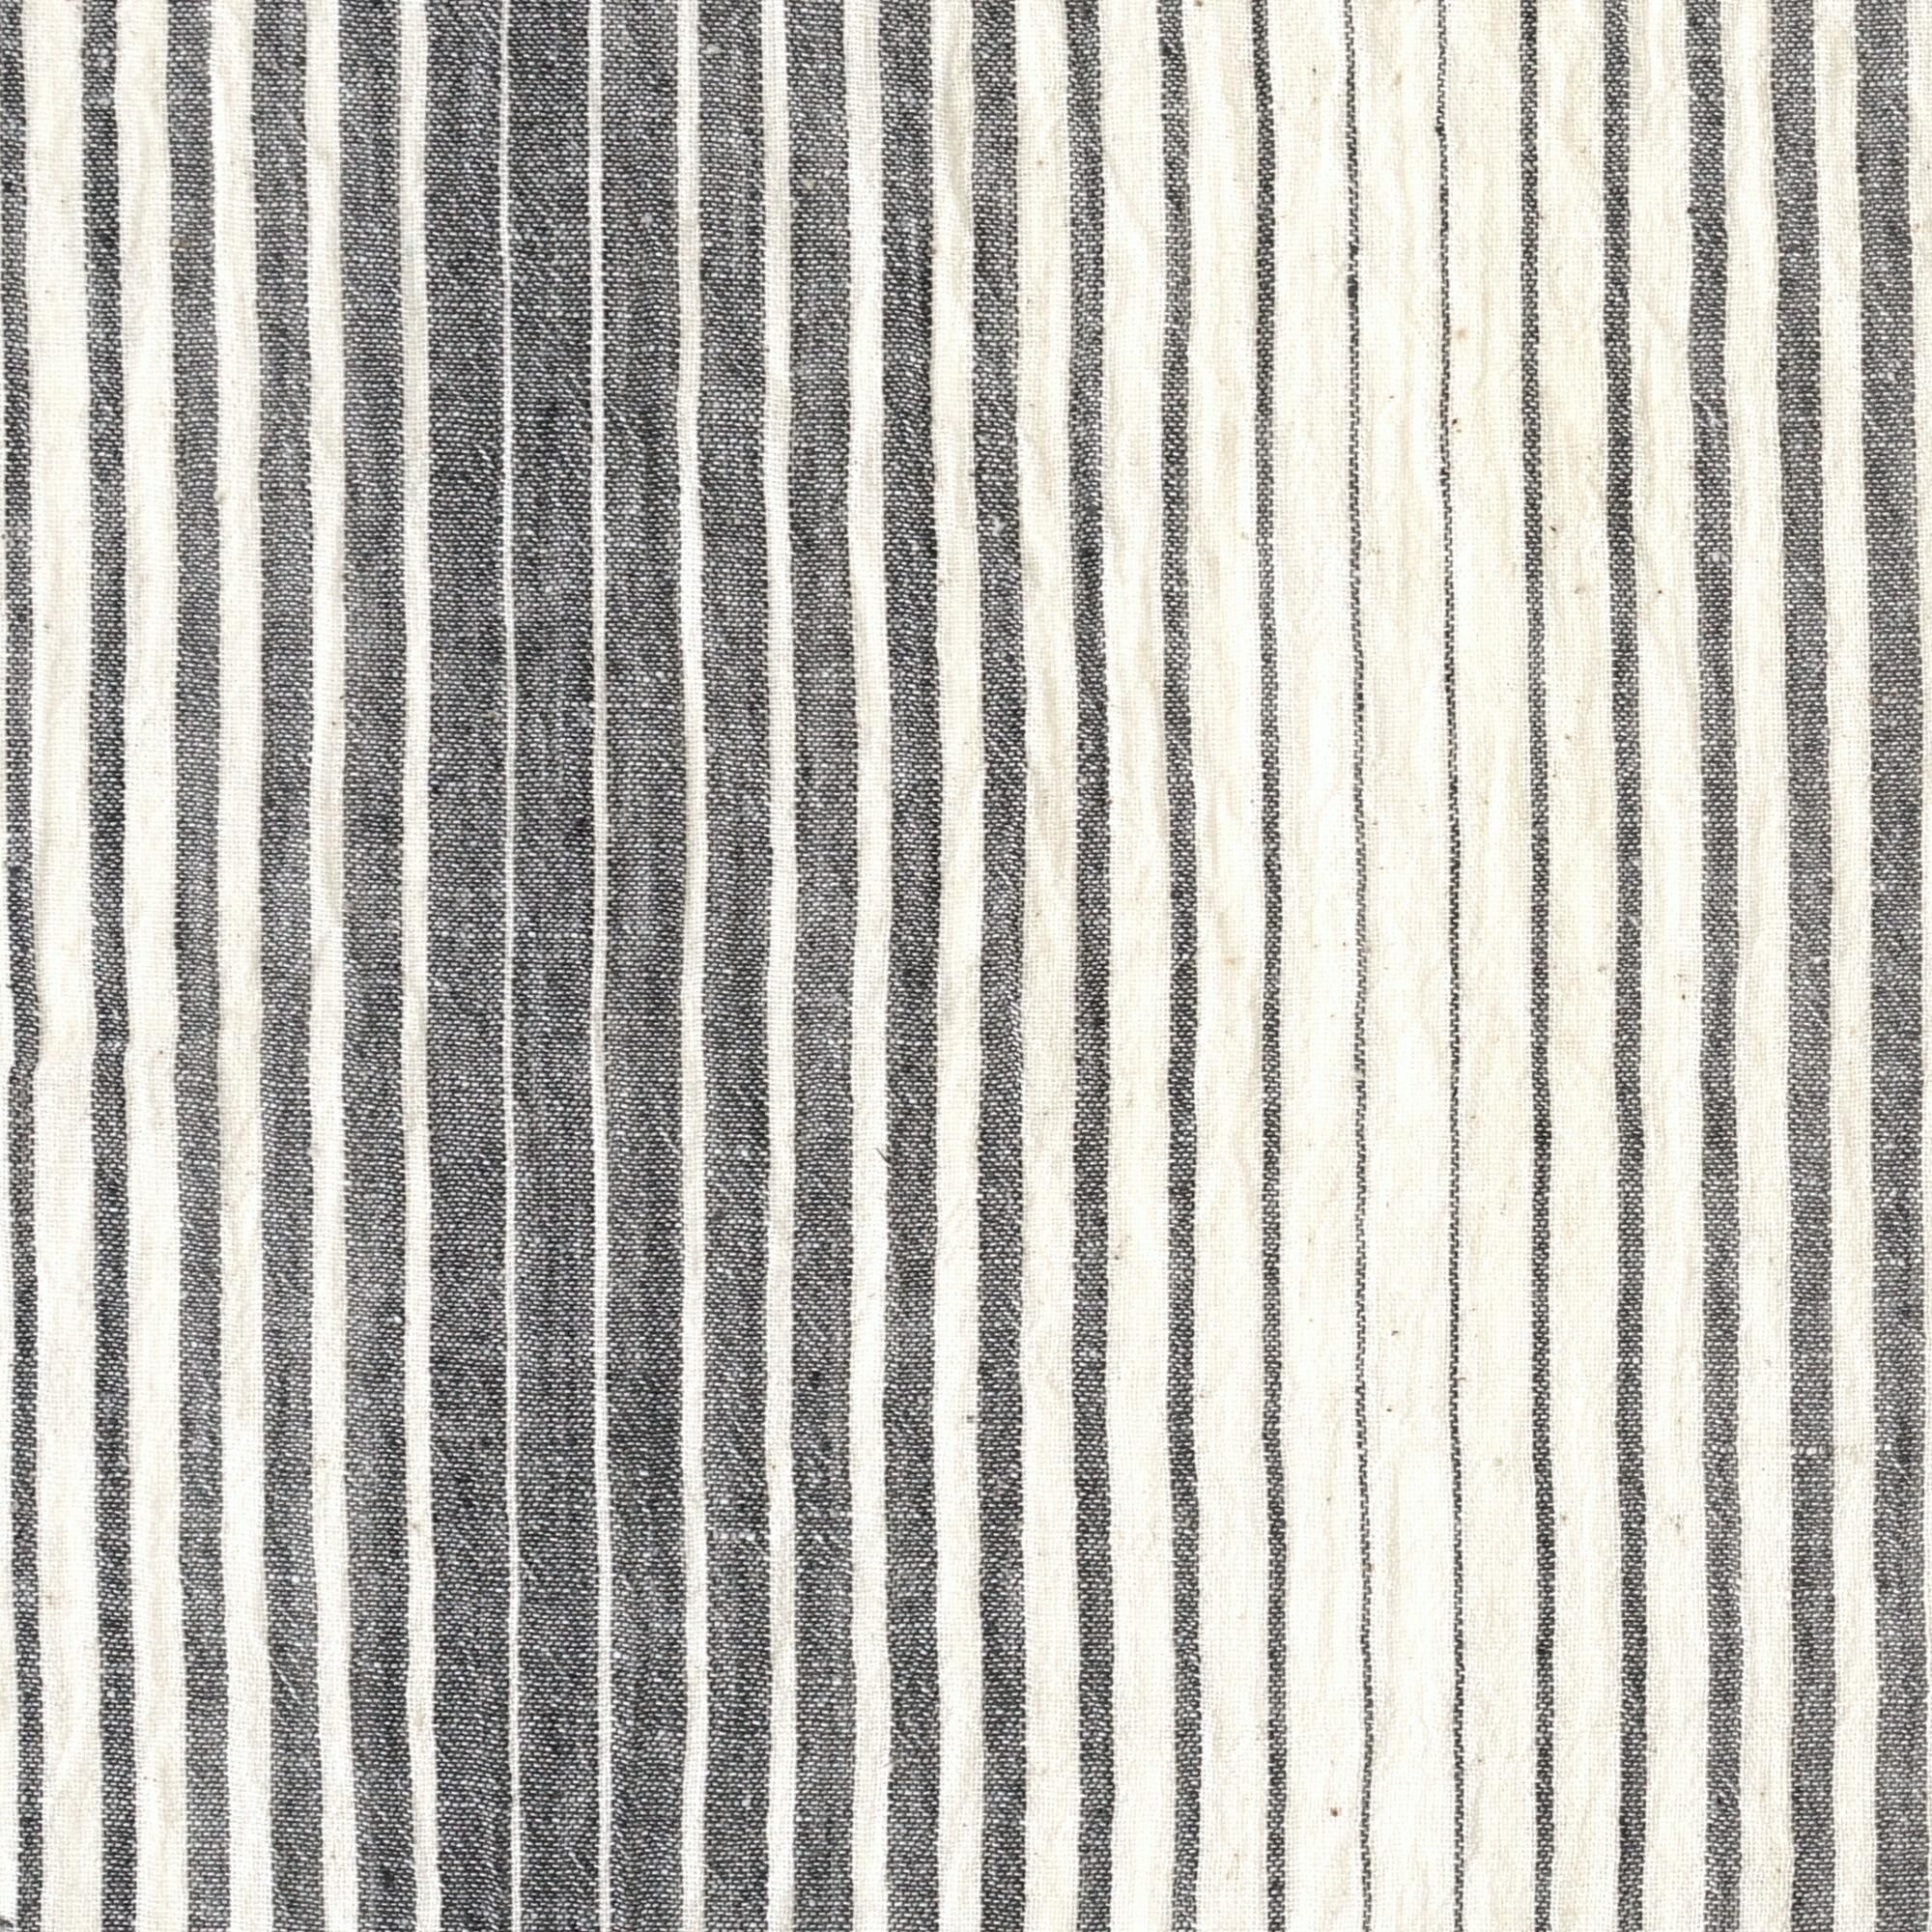 KHE03 - Organic Kala Cotton - Handloom Woven - Natural Dye - Charcoal Black - Fading Stripes - One By One - Flat